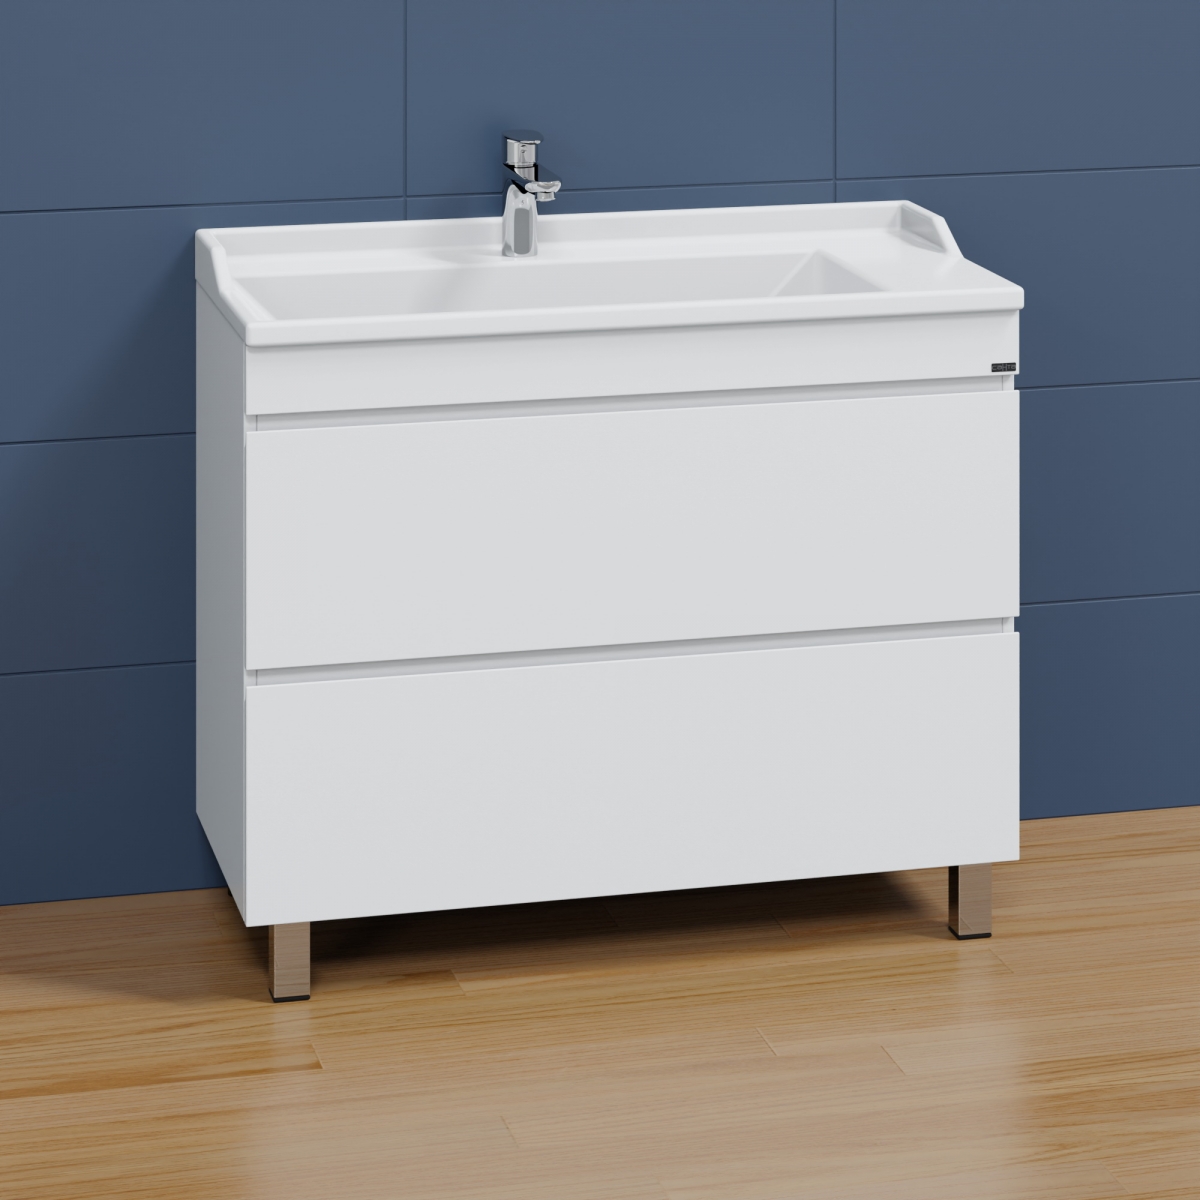 Мебель для ванной комнаты СанТа Марс 100 с 2-мя ящиками, напольная, белая, цвет белый